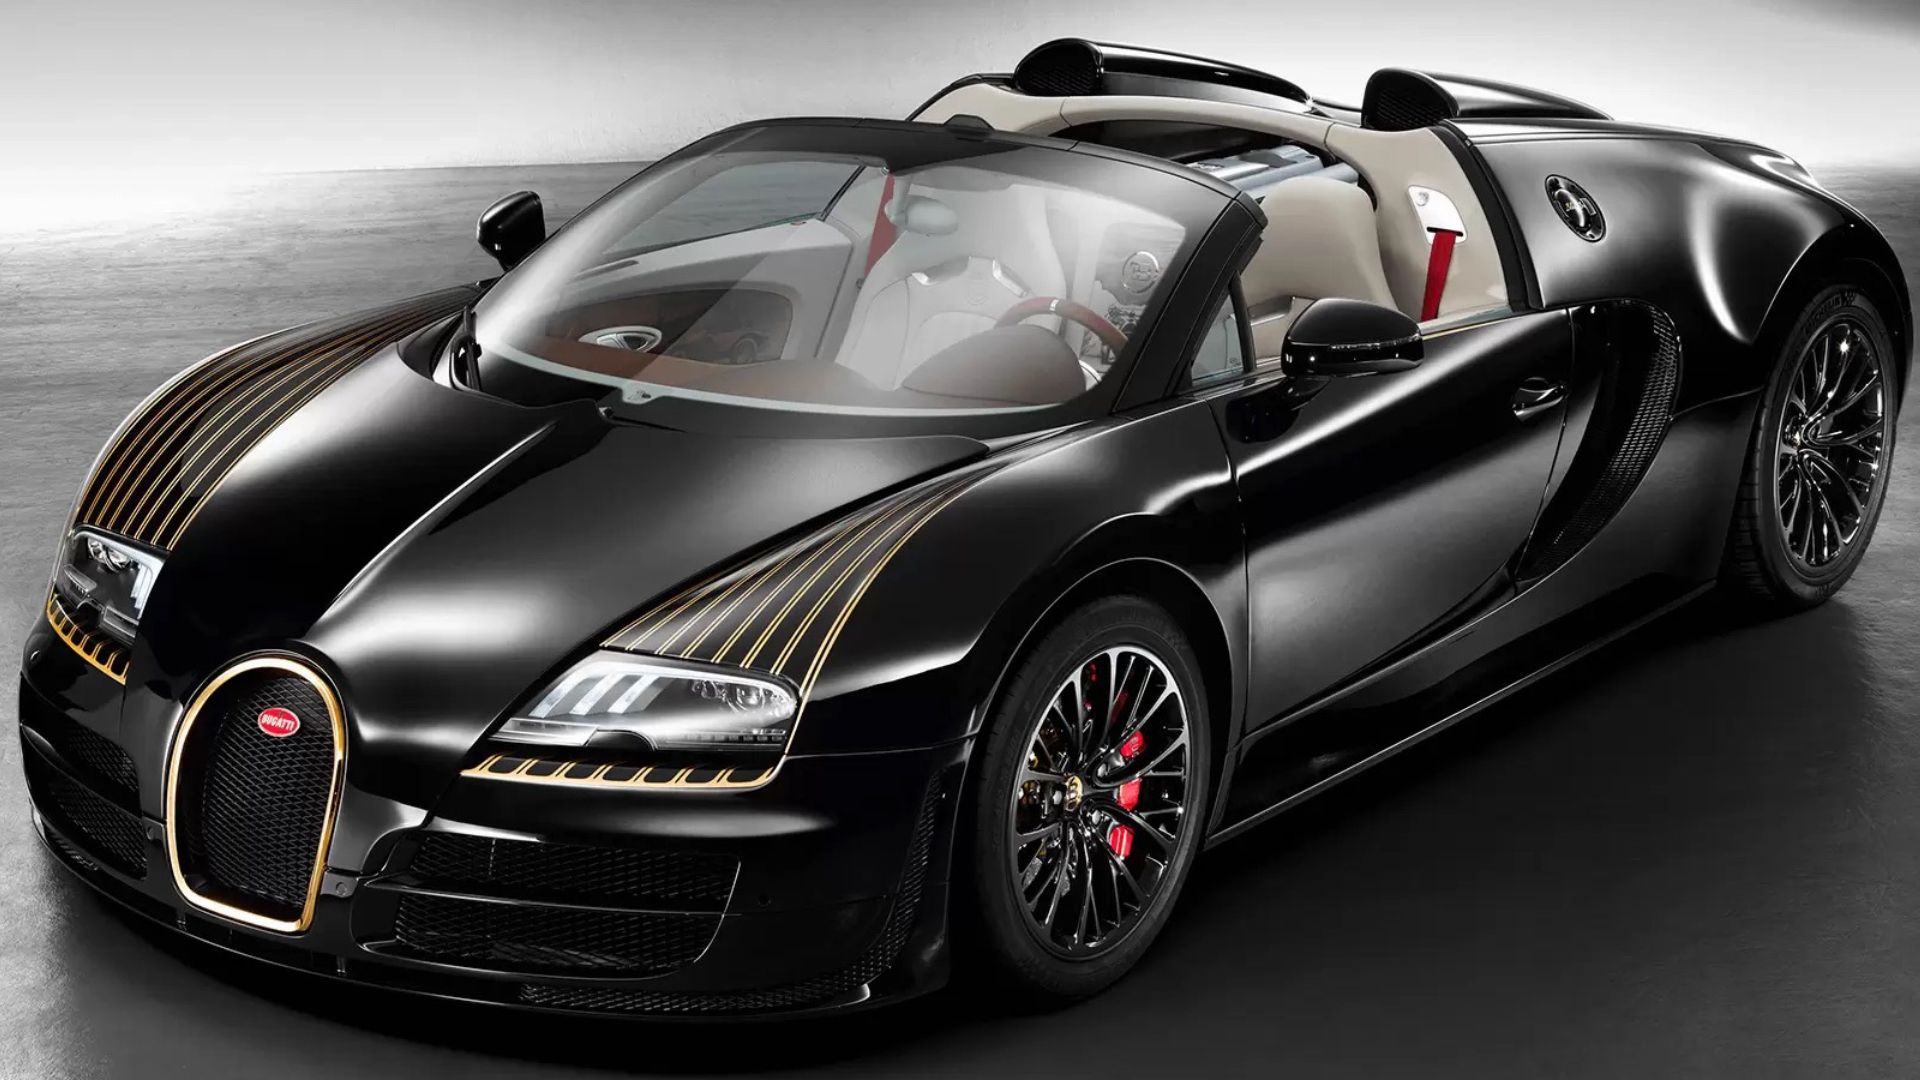 Germany Seizes Rare Bugatti Supercars Linked to 1MDB Scandal